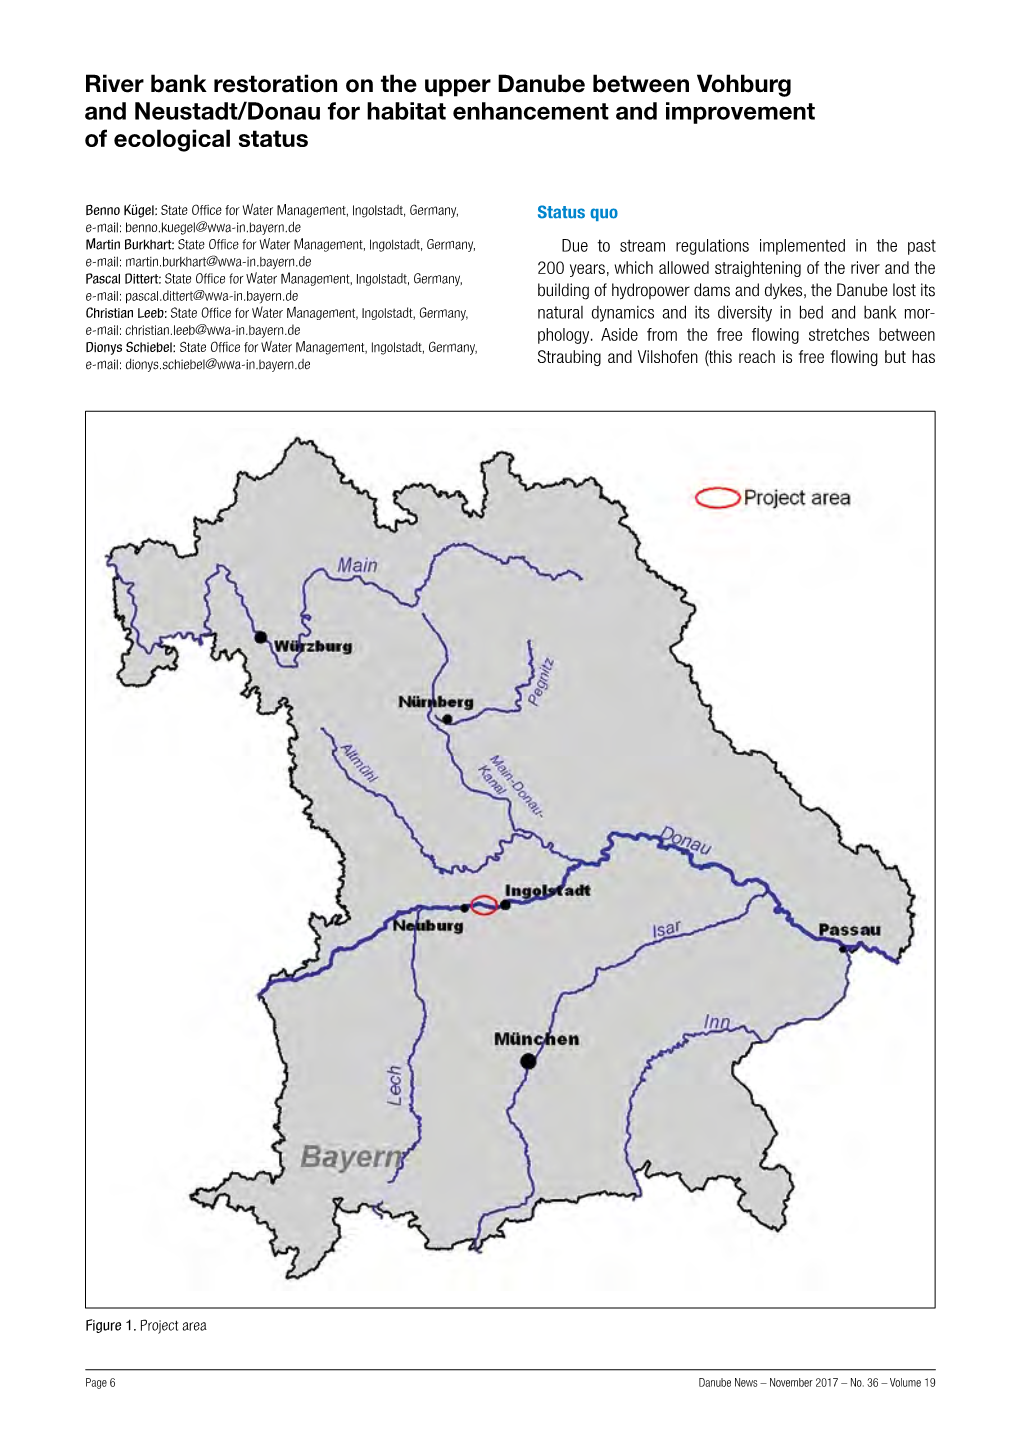 River Bank Restoration on the Upper Danube Between Vohburg and Neustadt/Donau for Habitat Enhancement and Improvement of Ecological Status